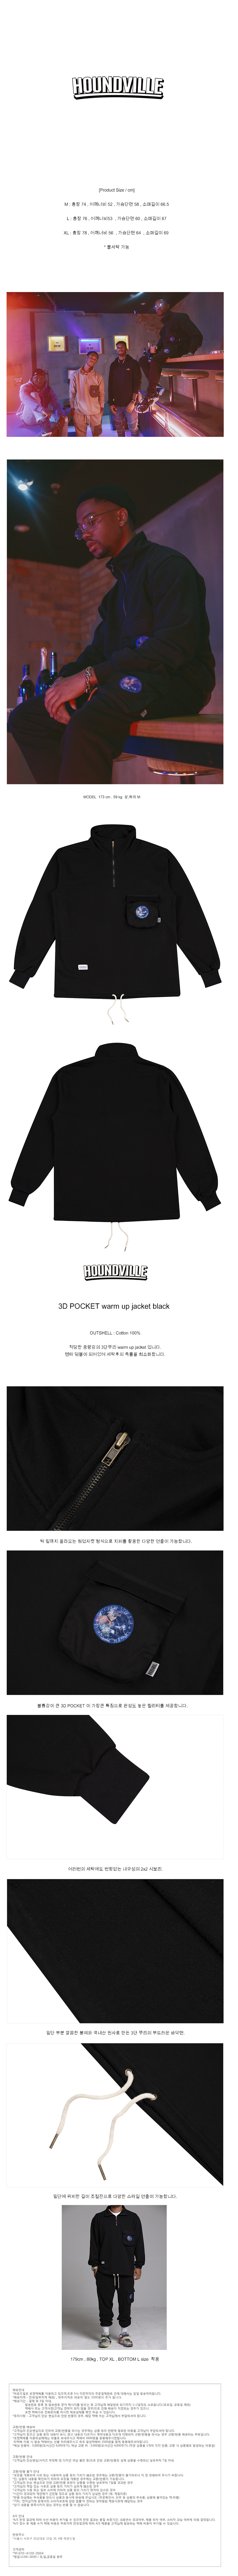 3D POCKET warm up jacket  black.jpg